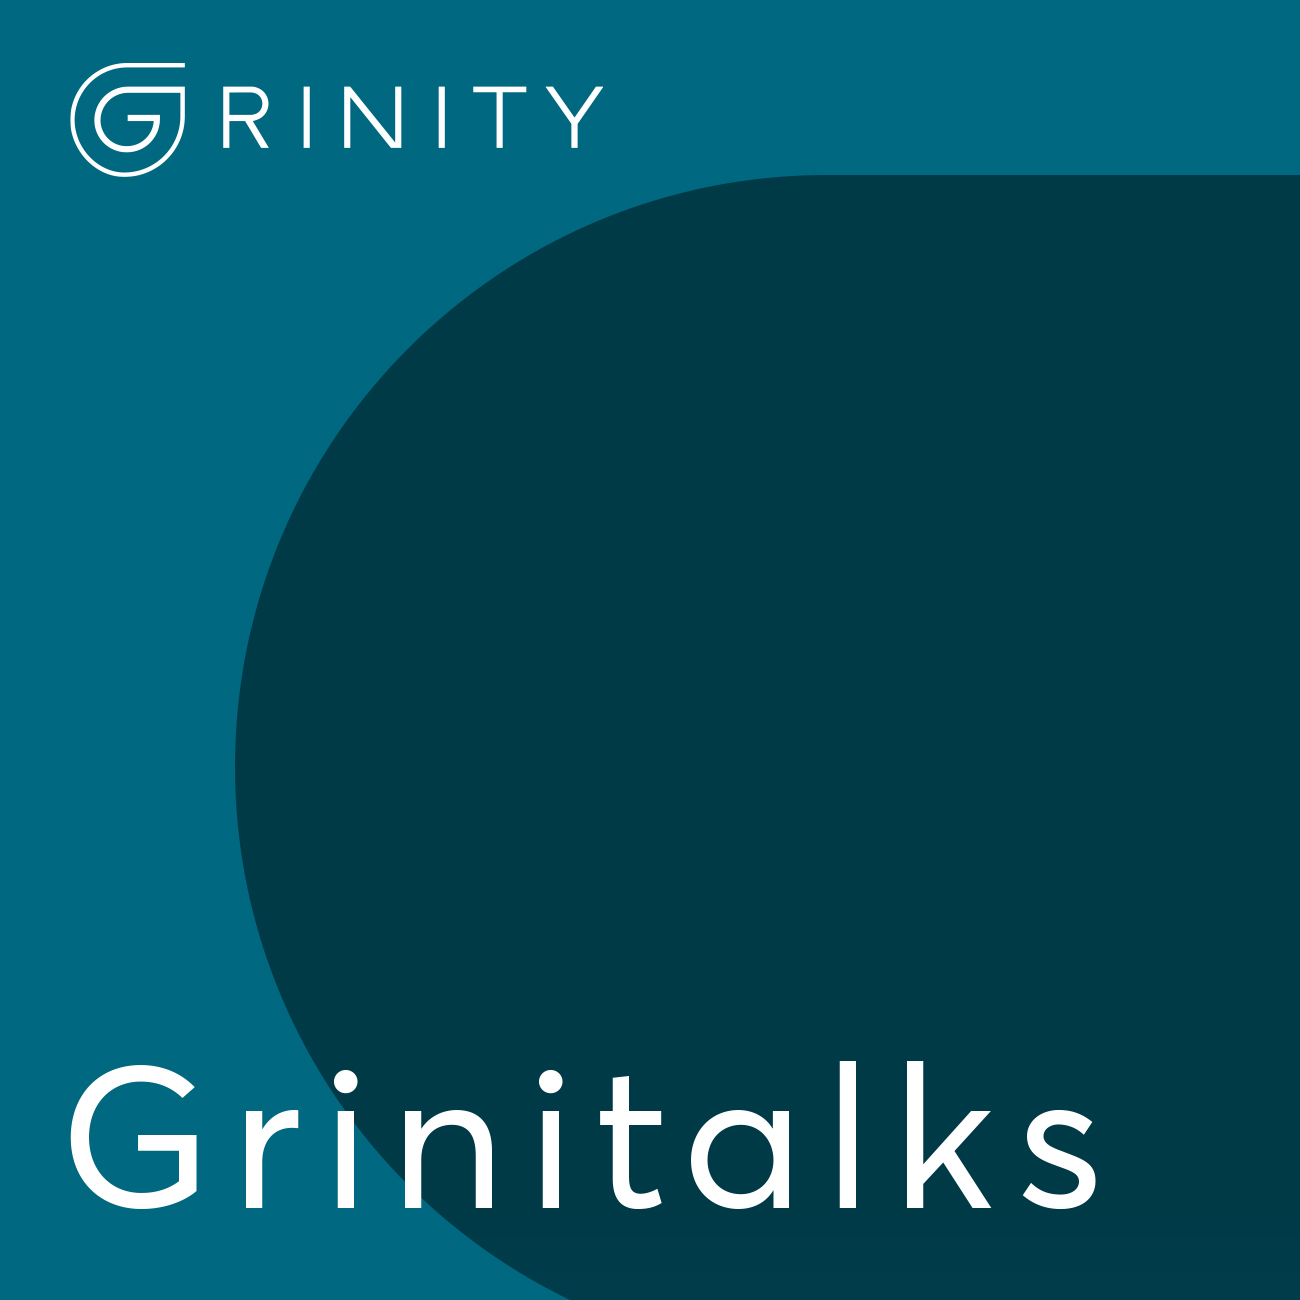 Grinitalks